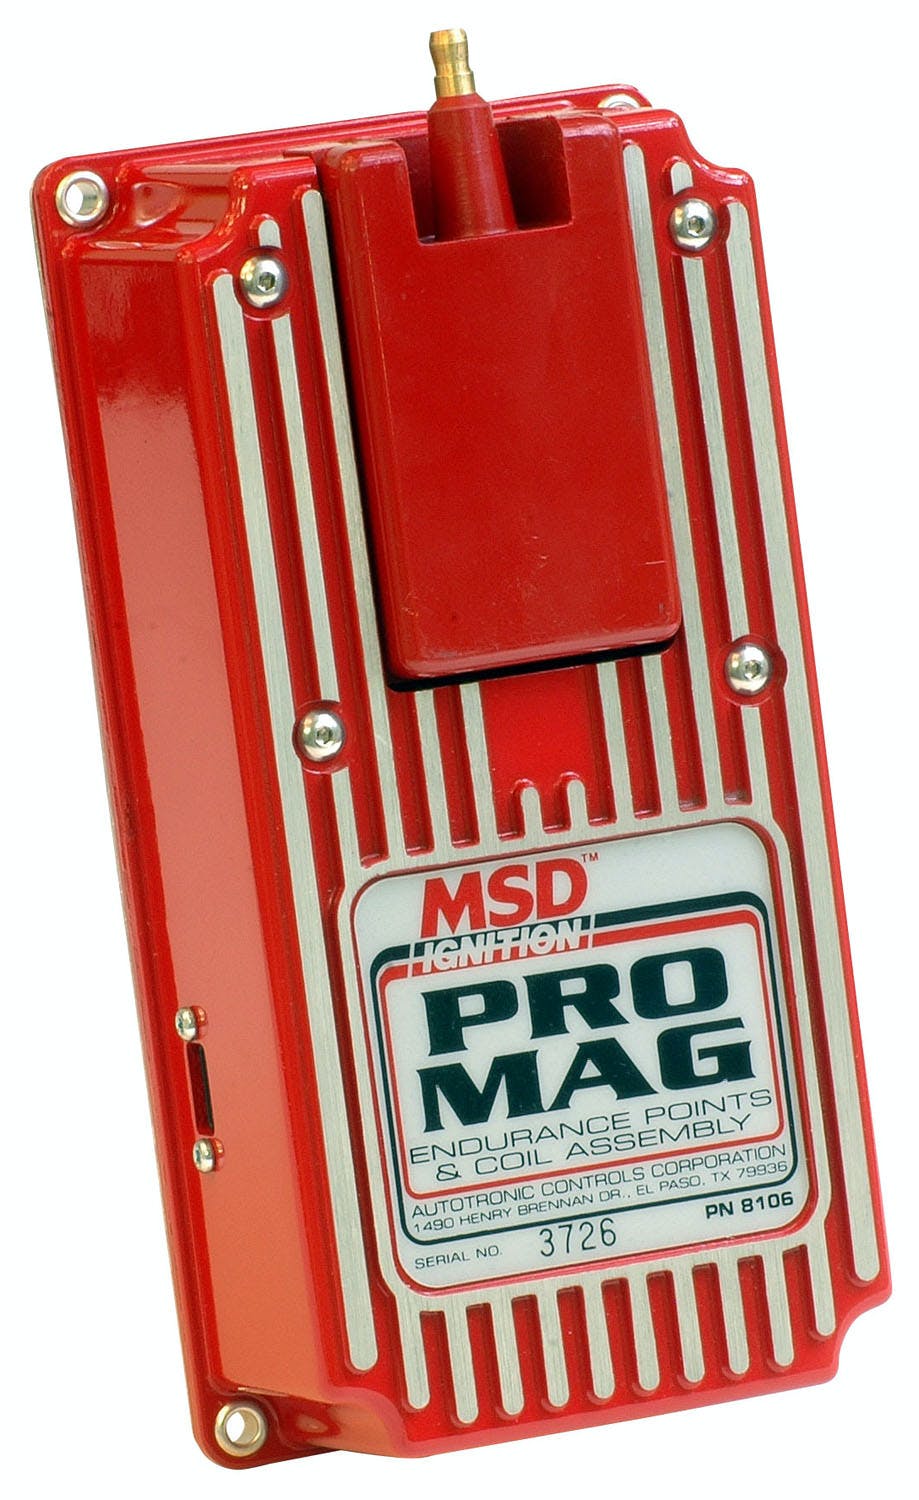 MSD Performance 8106 Points box 12 amp pro mag, endurance use